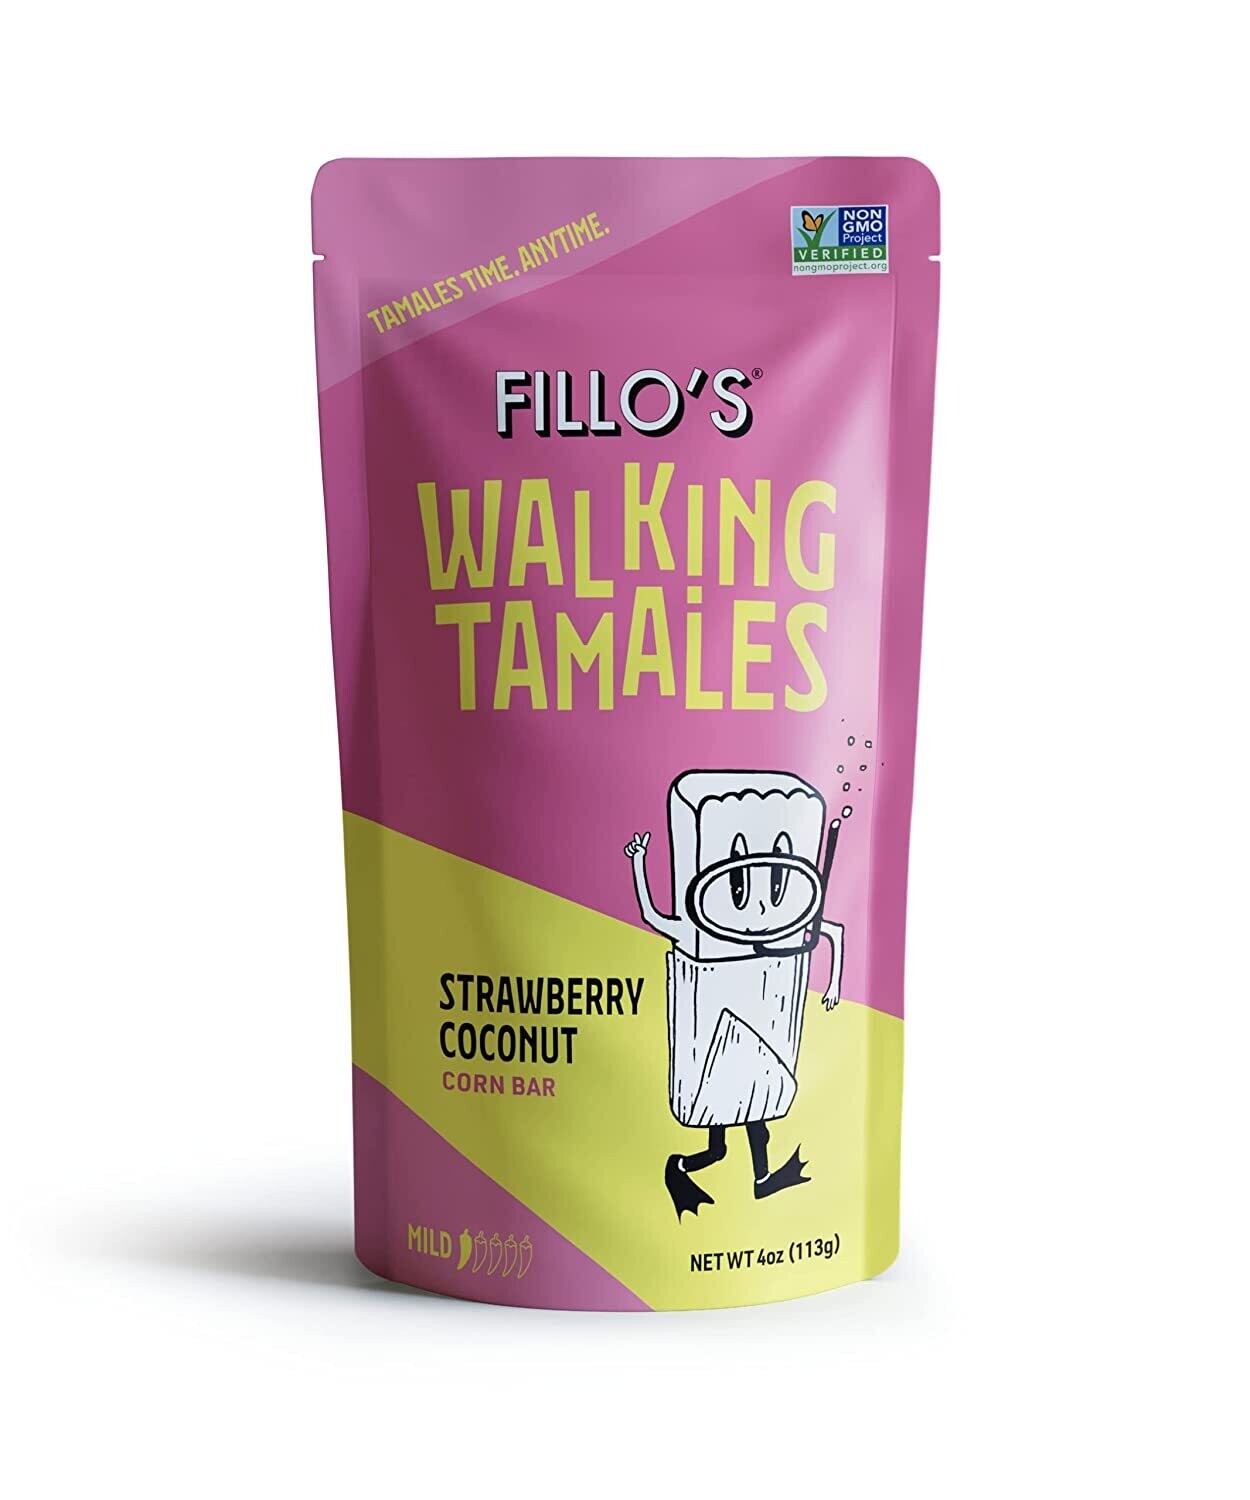 Fillo's Walking Tamales Corn Bar - Strawberry Coconut (mild)